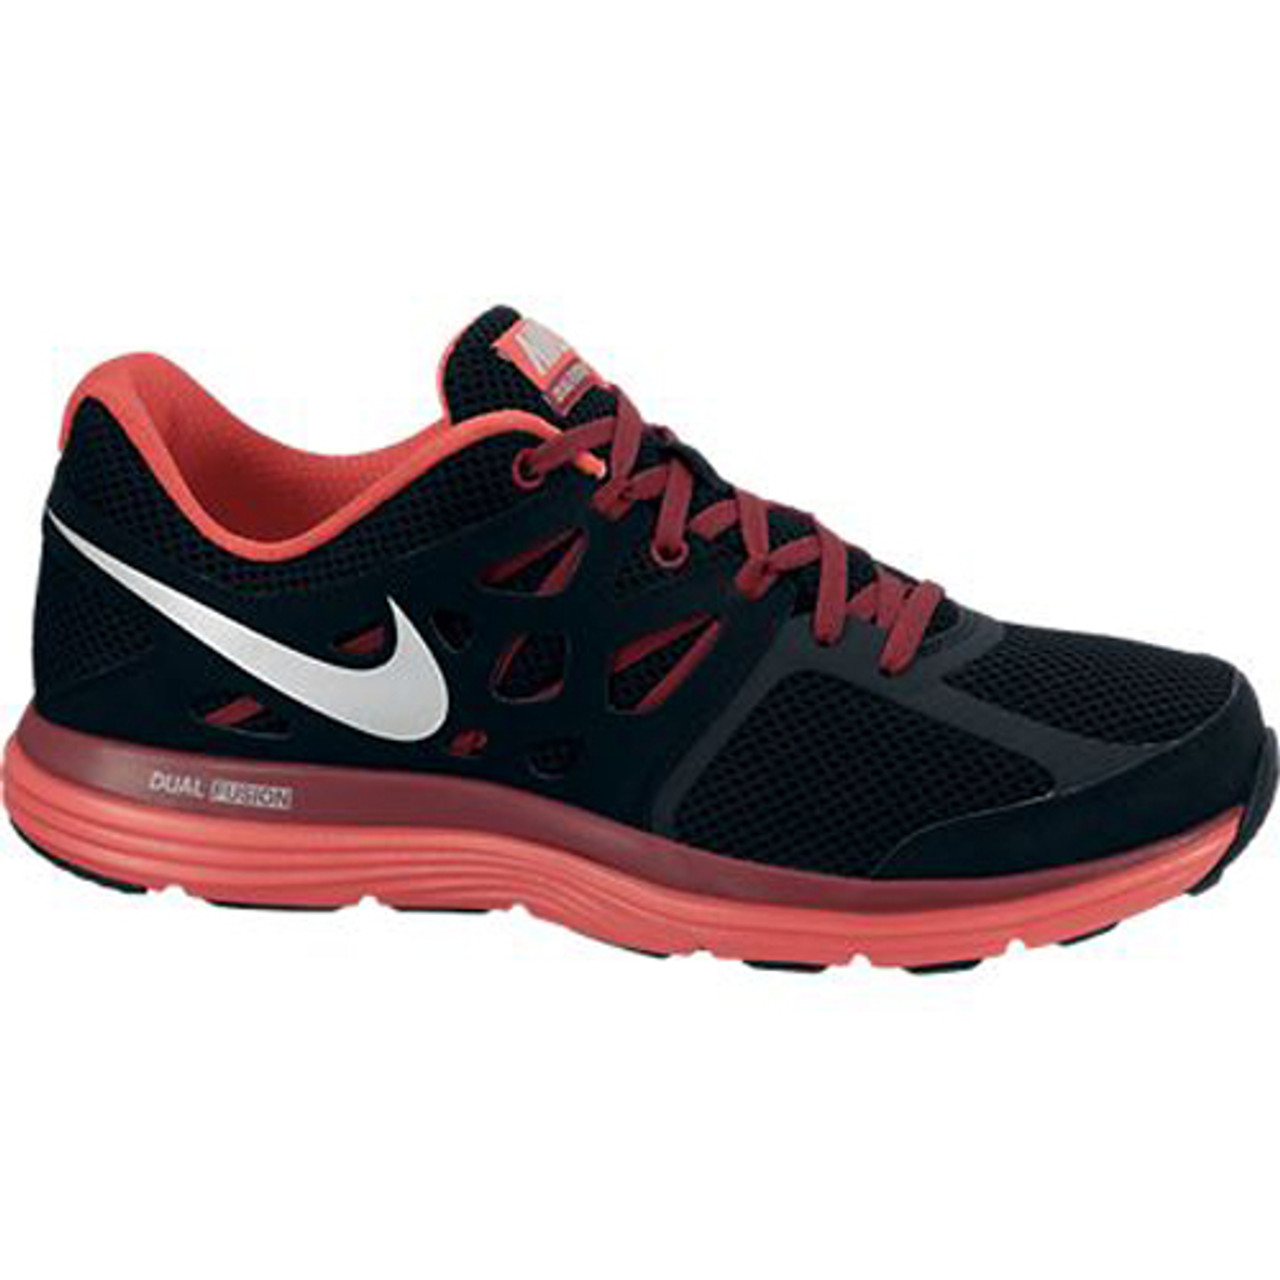 New Nike Dual Fusion Lite Black/Red Mens Running Shoes - Black/Team Red/Challenge Red/Silver | Discount Nike Men's Athletic & More - Shoolu.com Shoolu.com